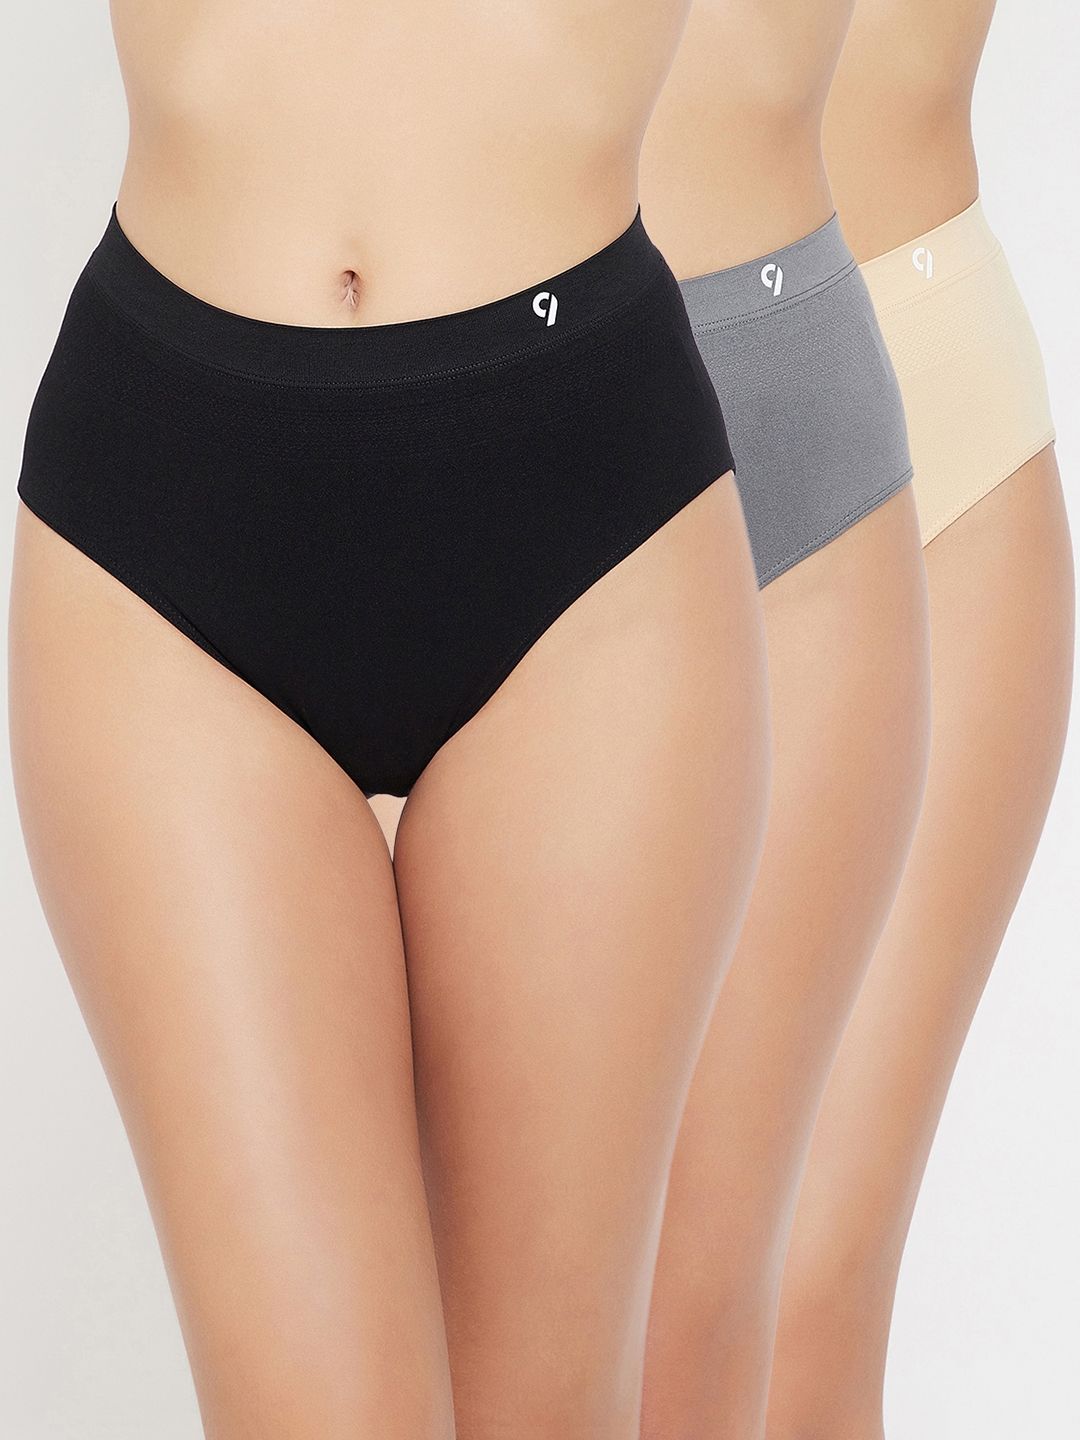 Buy Women's Comfort Feel Bra Panty Set, Pack of 3 Multicolor (Size